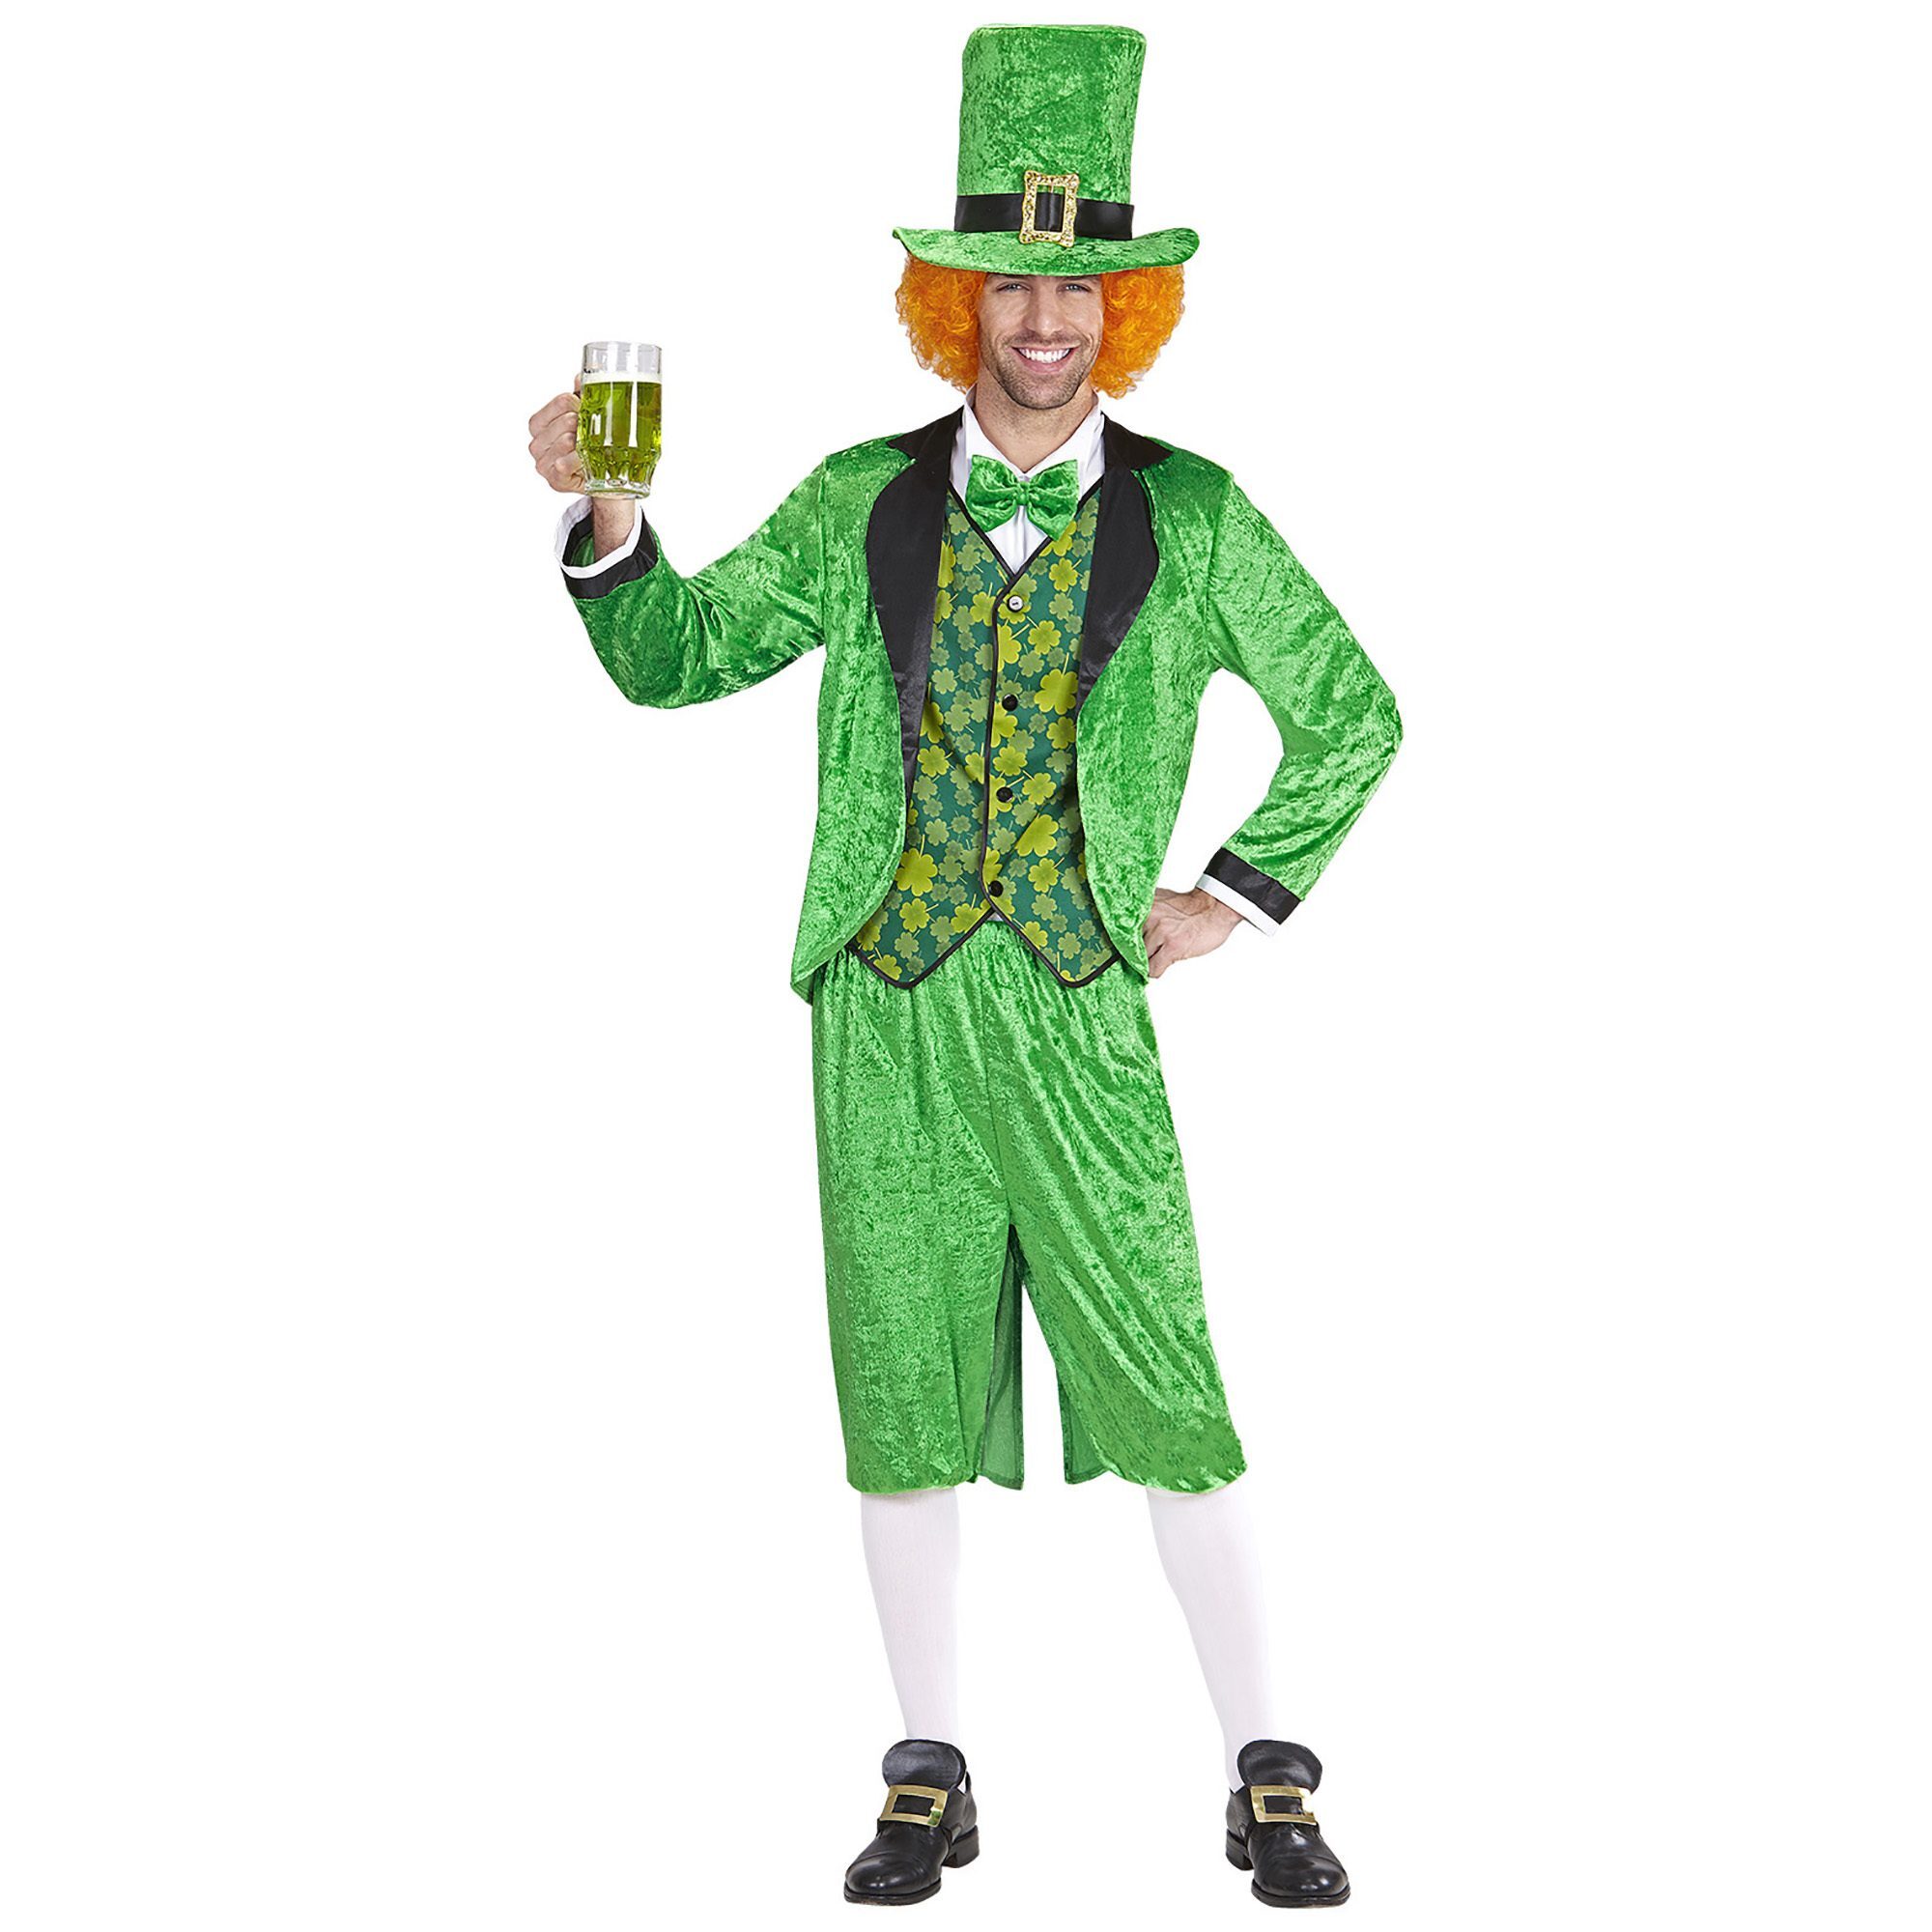 St patricks day groene kostuum kabouter